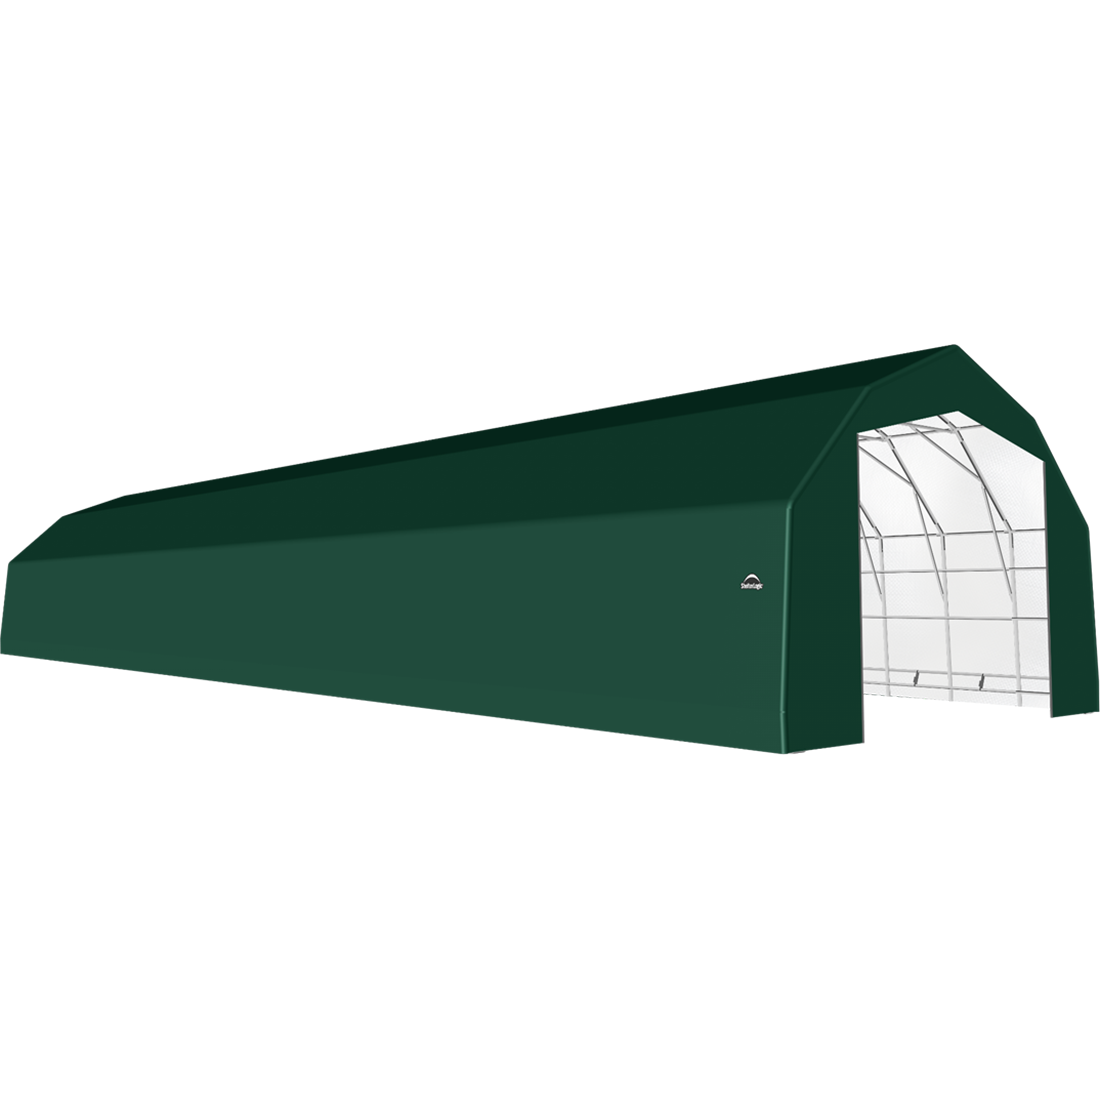 ShelterTech SP Series Barn Shelter, 25 ft. x 96 ft. x 17 ft. Heavy Duty PVC 14.5 oz. Green